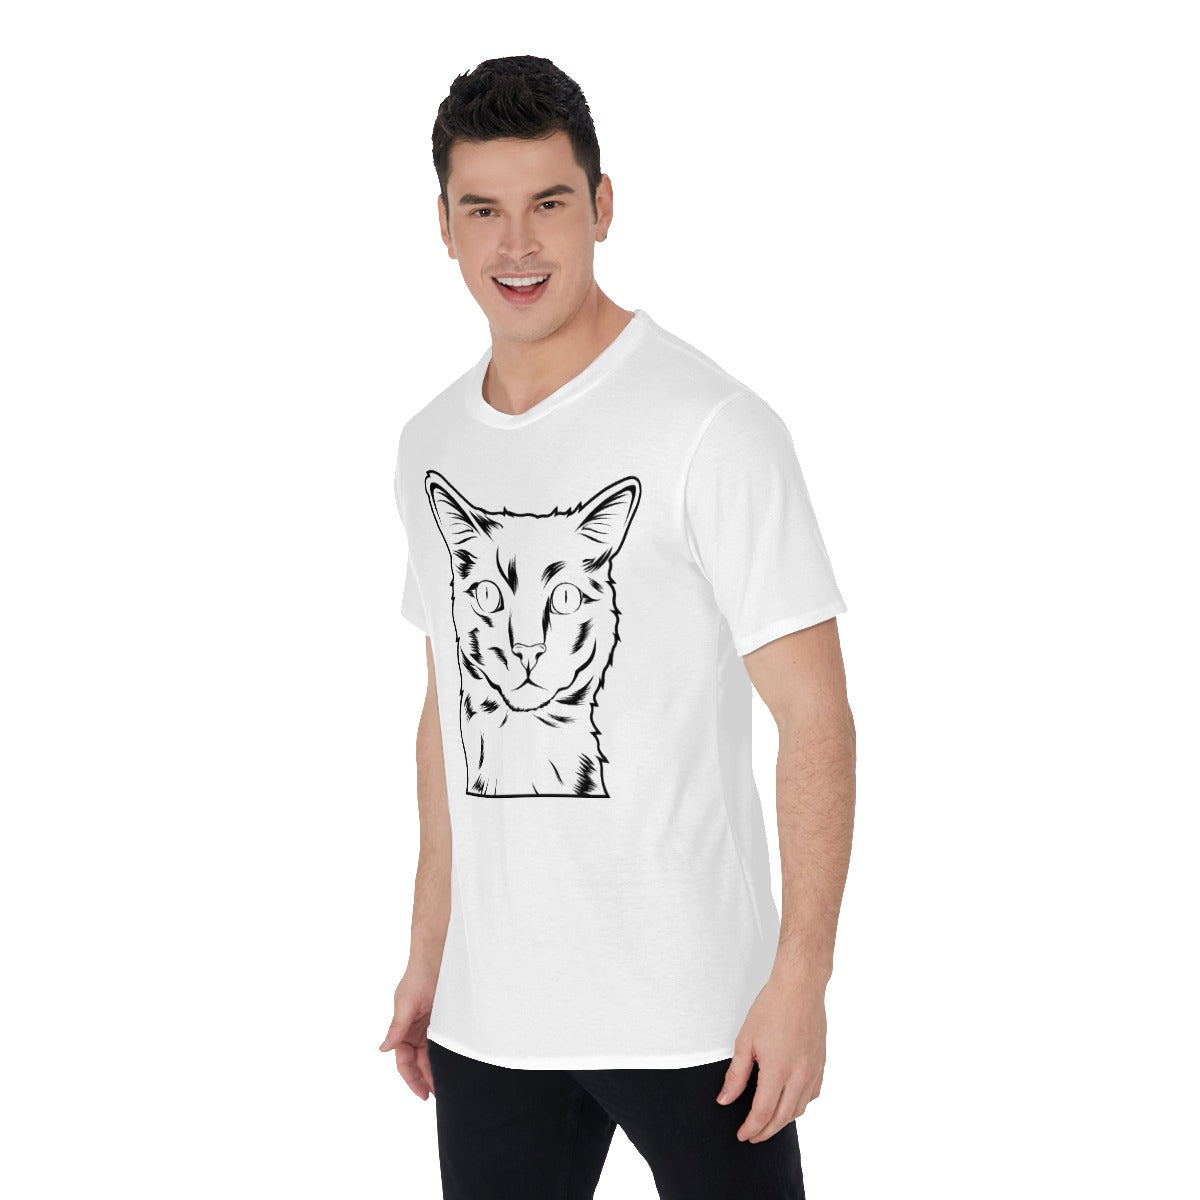 Orig. Drawn Face Art Custom Men's T-Shirt (Dog, Cat, Human) (NEXT-DAY prod. avail. at checkout)